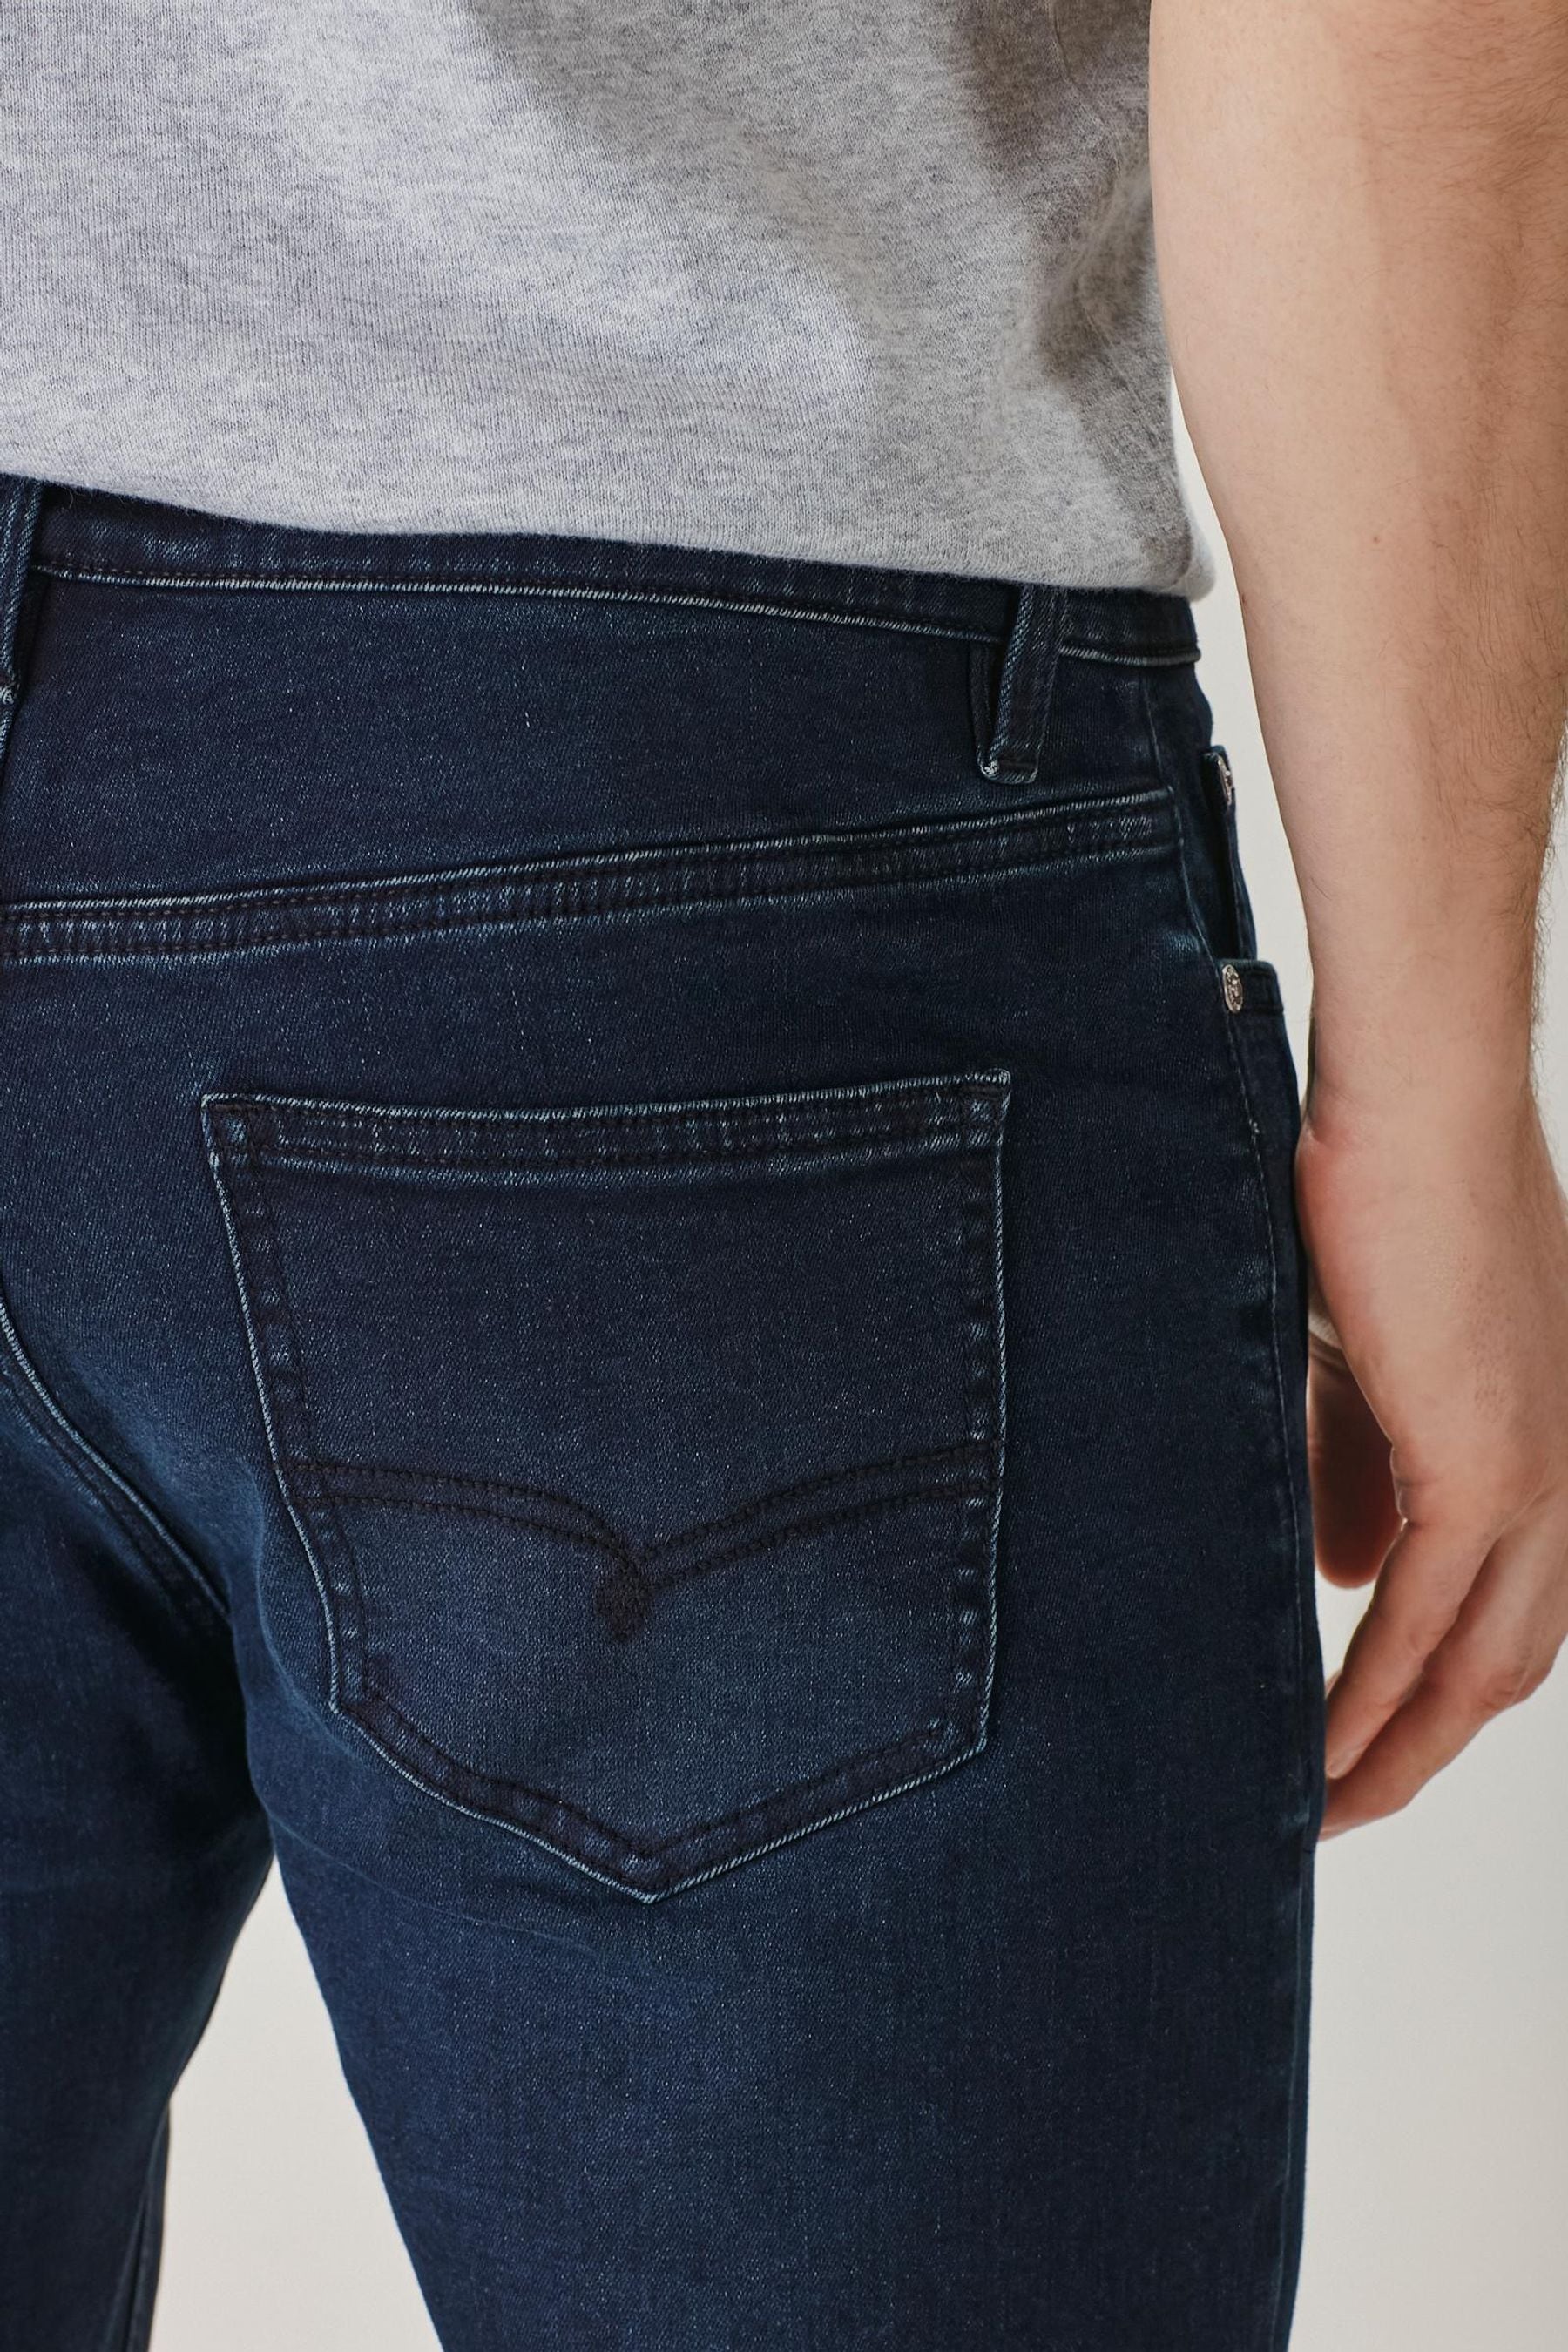 Buy Motion Flex Stretch Slim Fit Jeans from Next Ireland